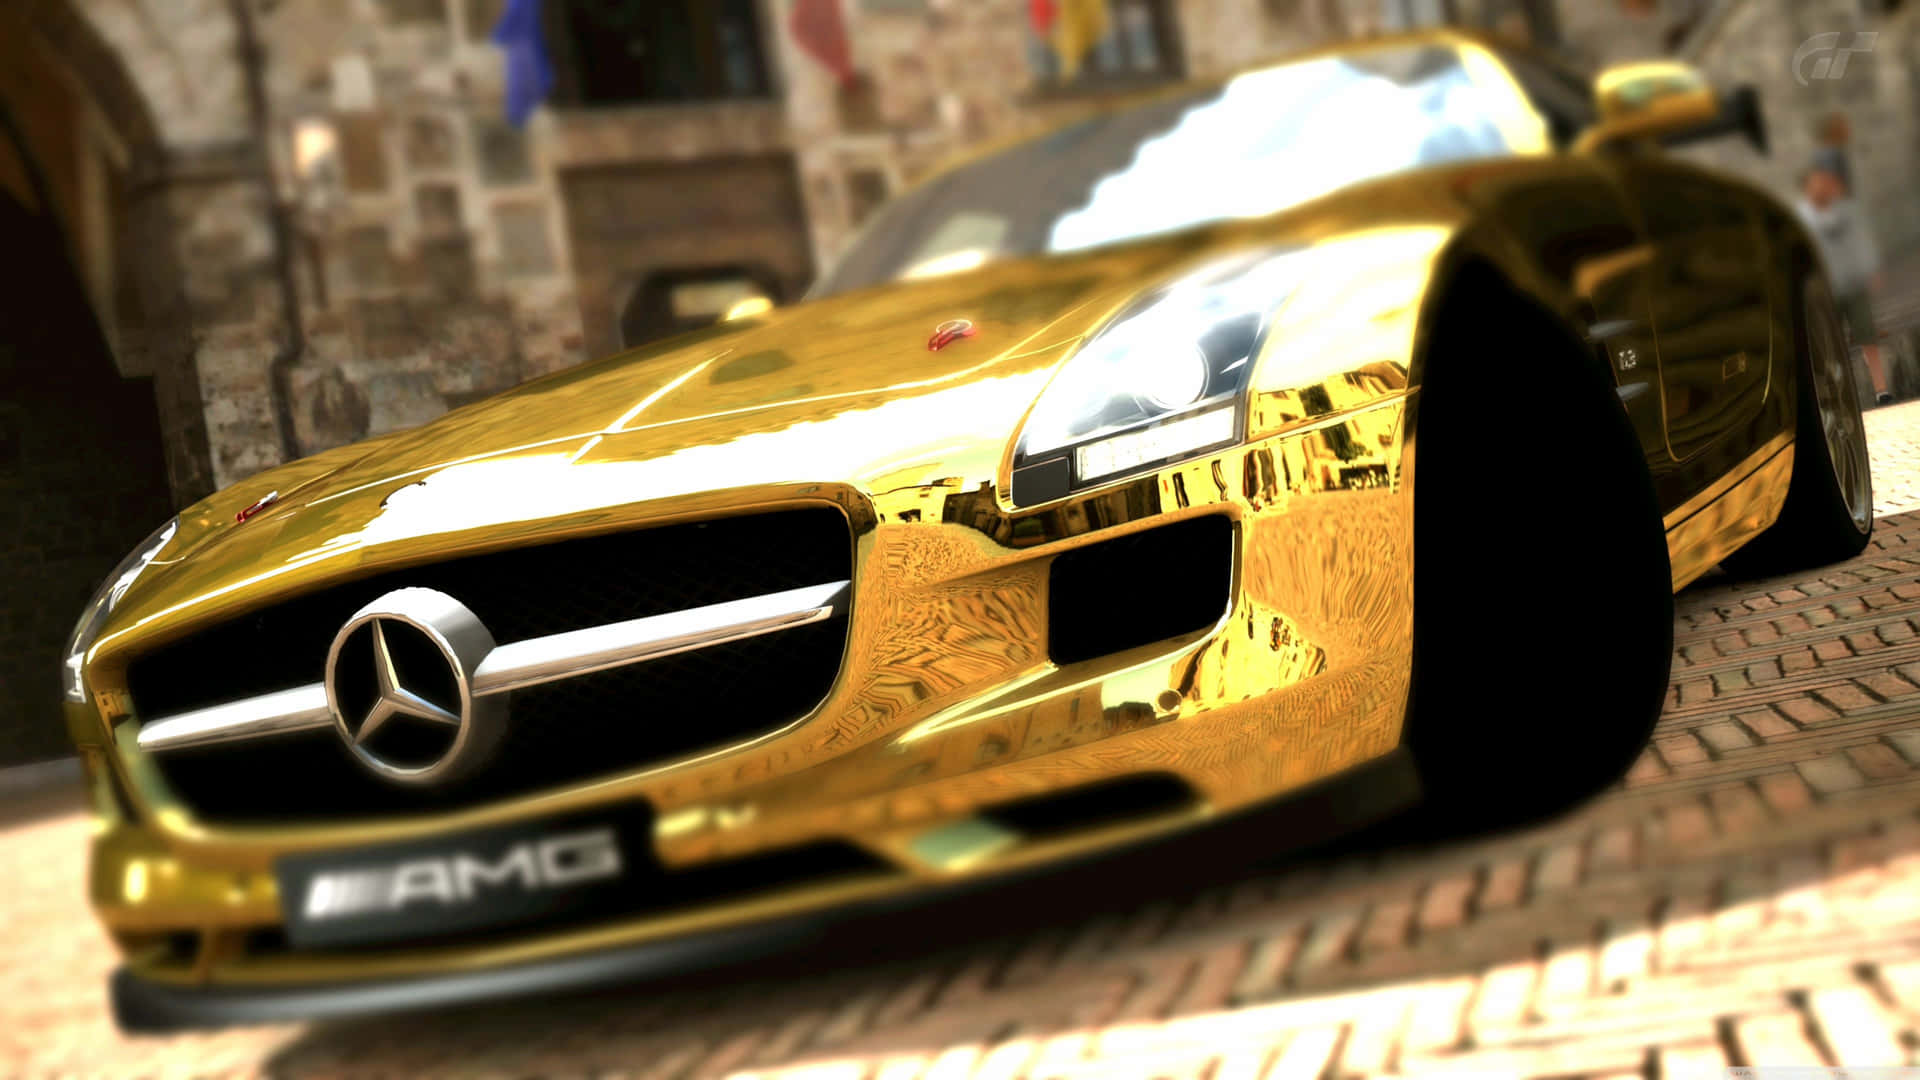 Caption: Luxurious Gold Mercedes Benz SLS AMG Sports Car Wallpaper